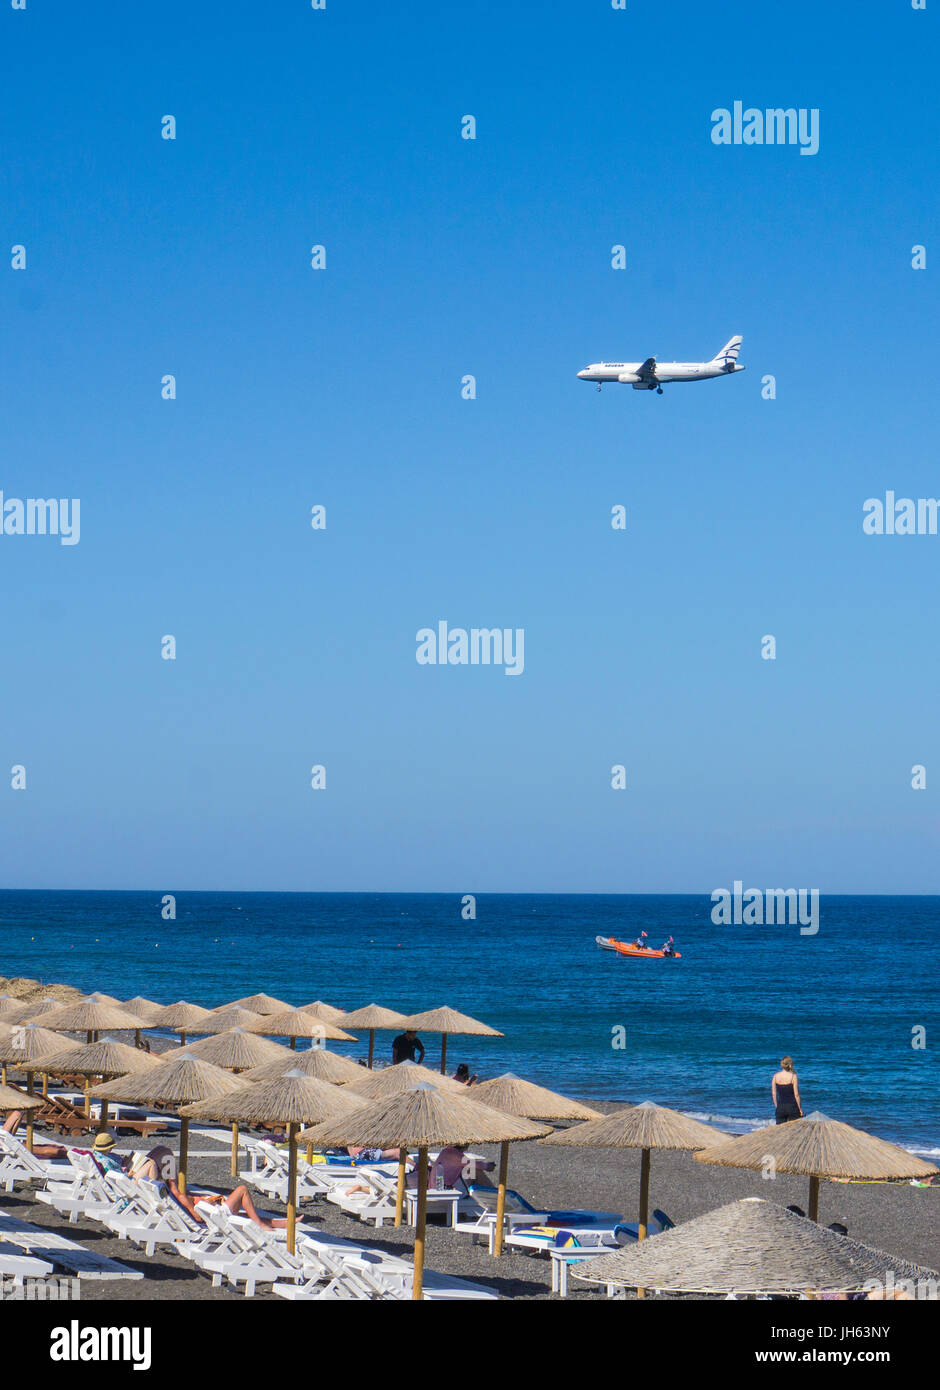 Flugzeug im Landeanflug, Kamari Beach, Badestrand bei Kamari, Santorin, Kykladen, Aegaeis, Griechenland, Mittelmeer, Europa | Airplane over Kamari Bea Stock Photo